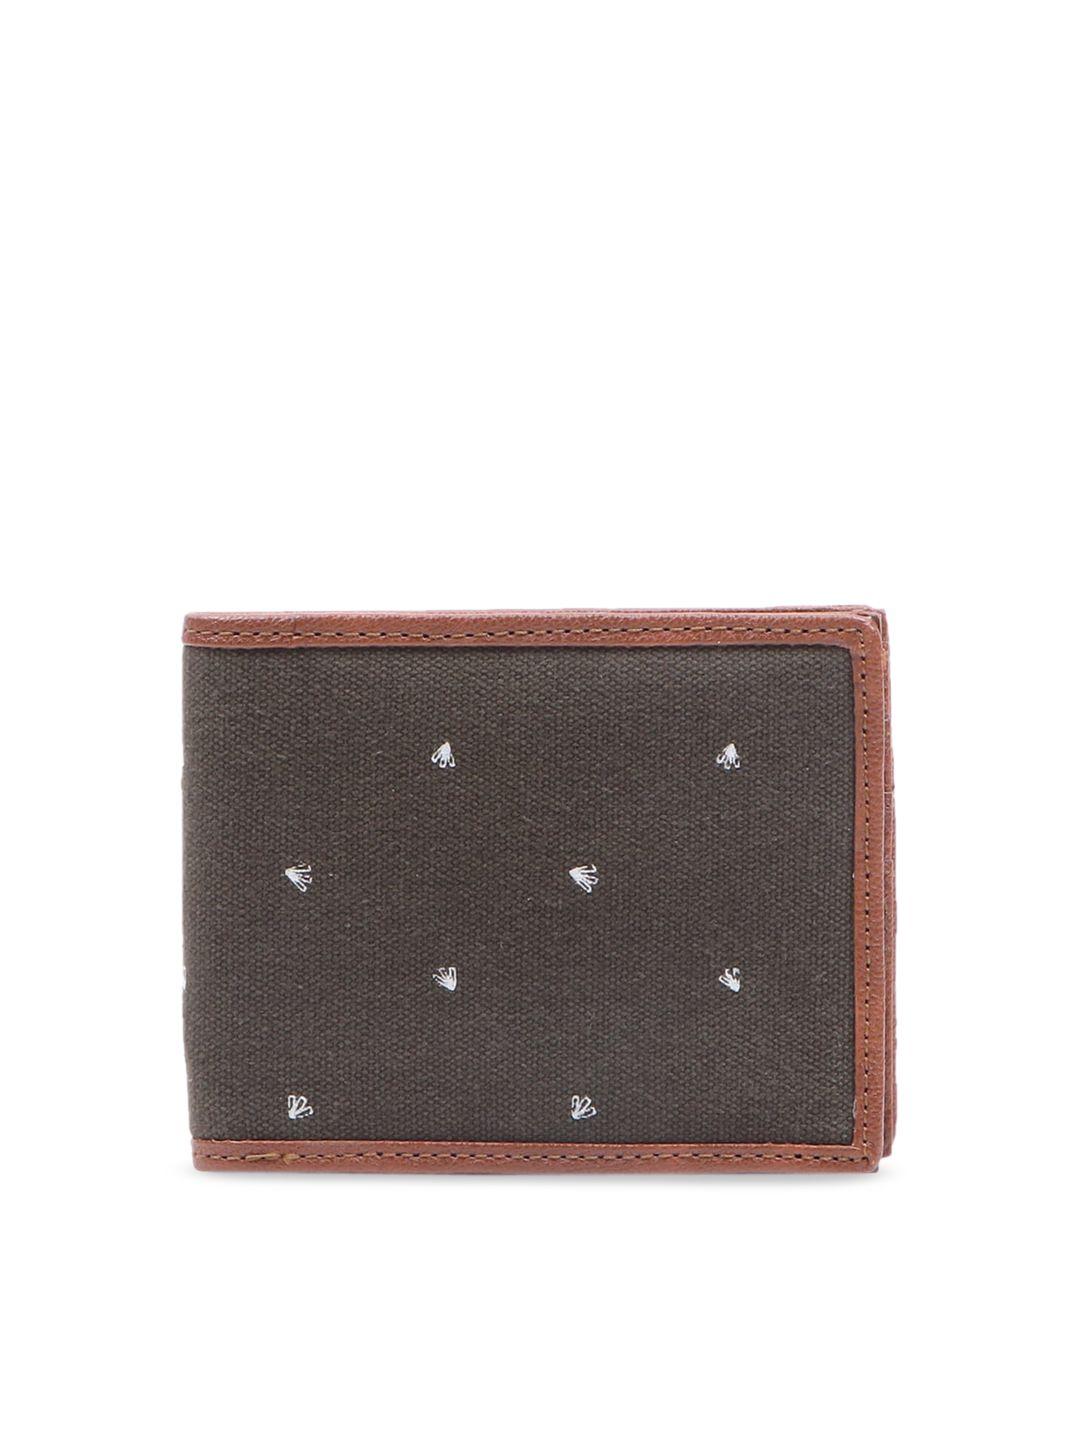 forever 21 men brown & white woven design two fold wallet